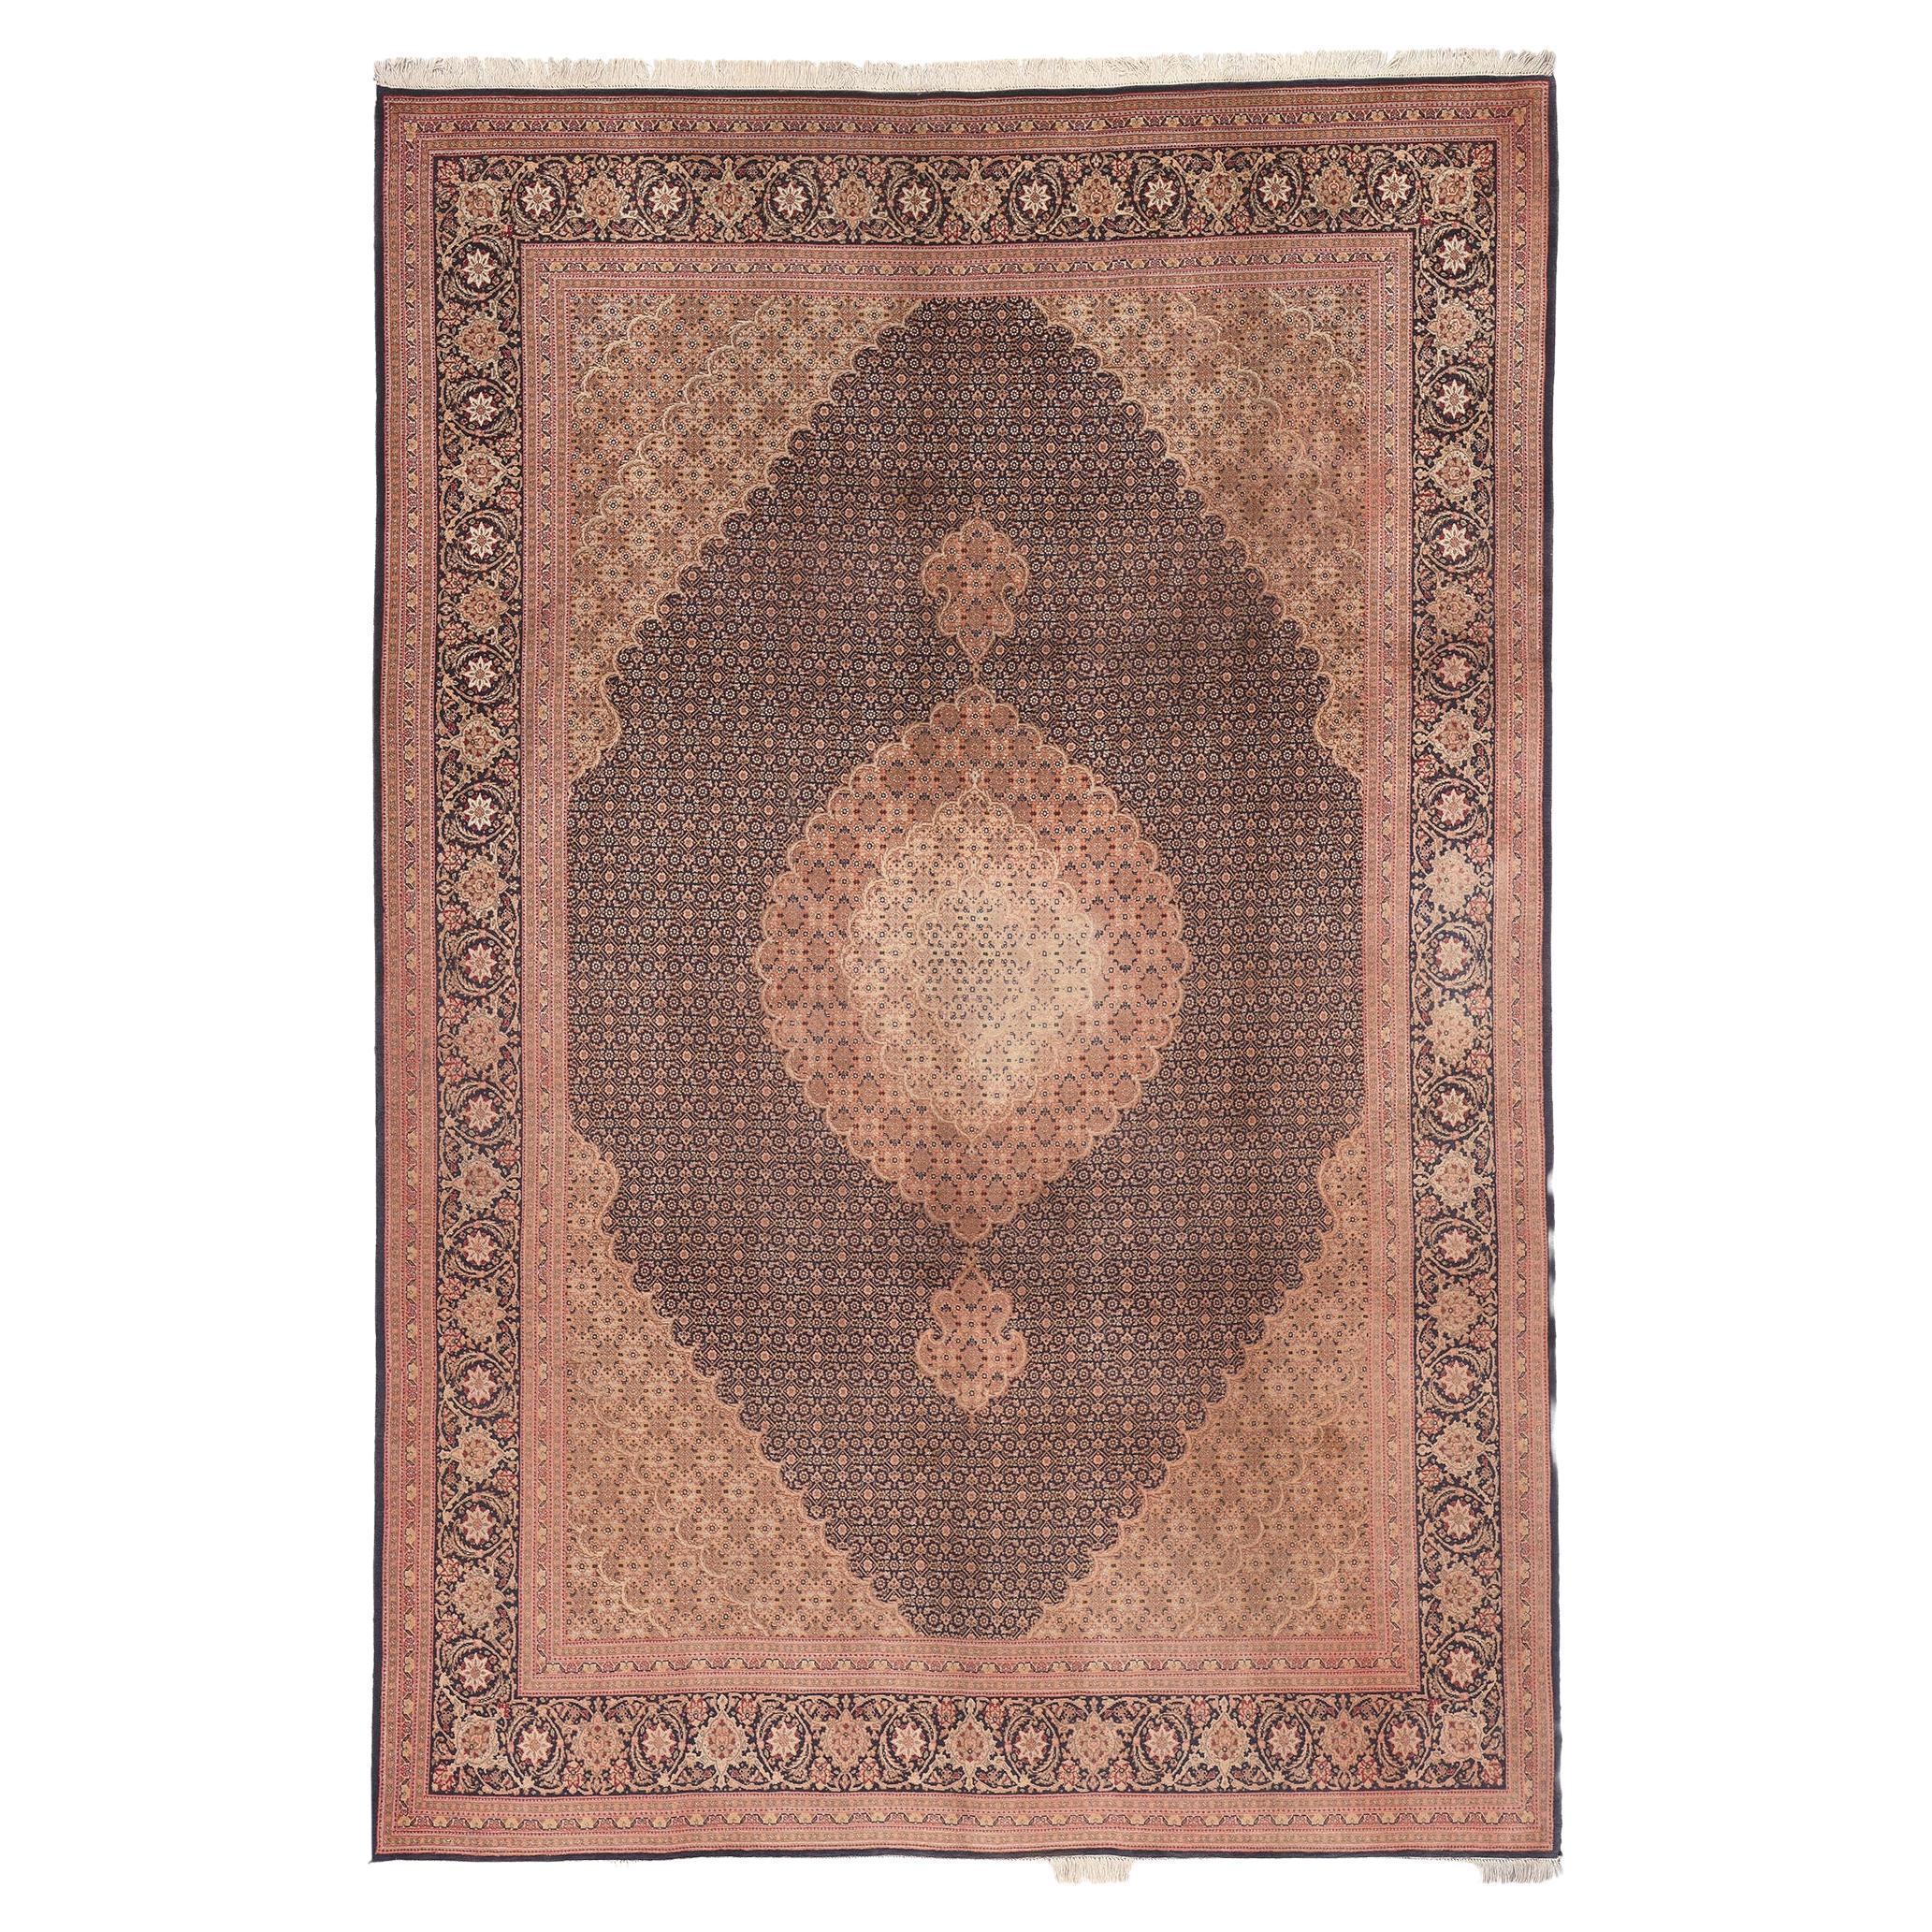 Vintage Persian Tabriz Rug, Timeless Elegance Meets Traditional Sensibility